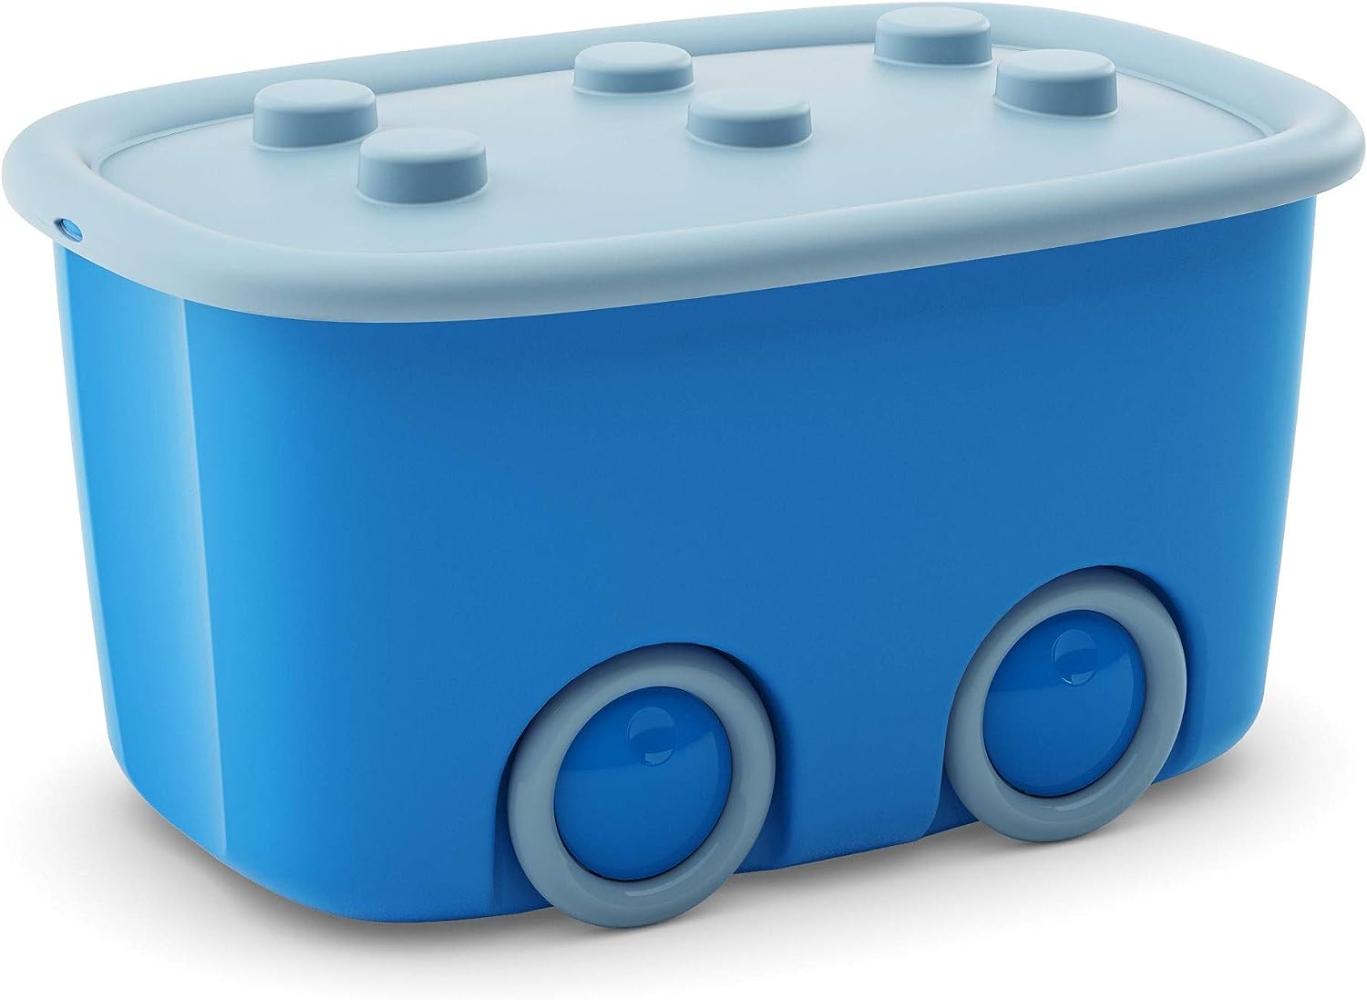 Kis Alto L Aufbewahrungsbox Funny Box 46 Liter in hellblau-blau, Plastik, 58x38.5x32 cm Bild 1